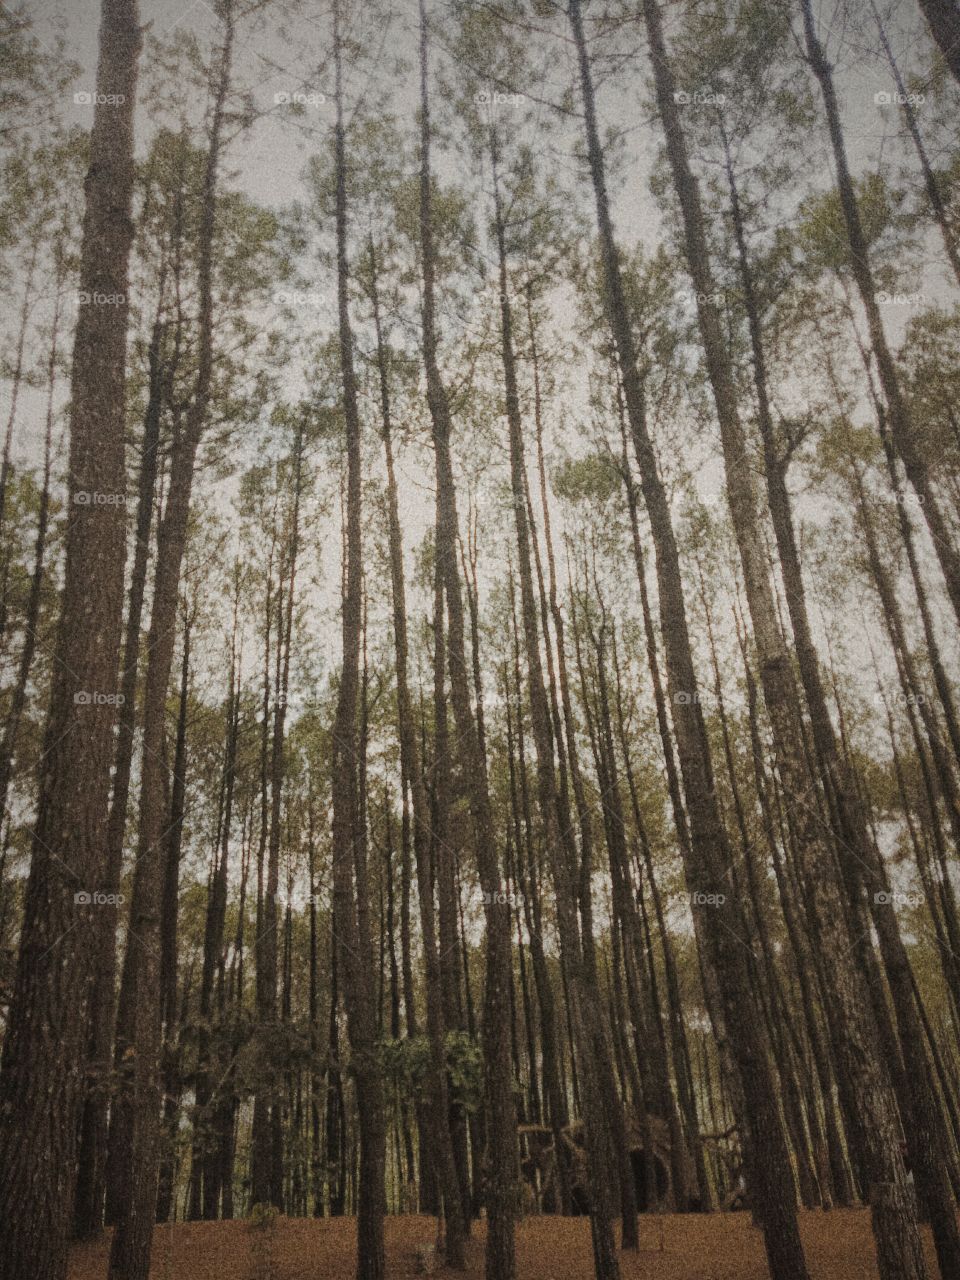 pinus forest